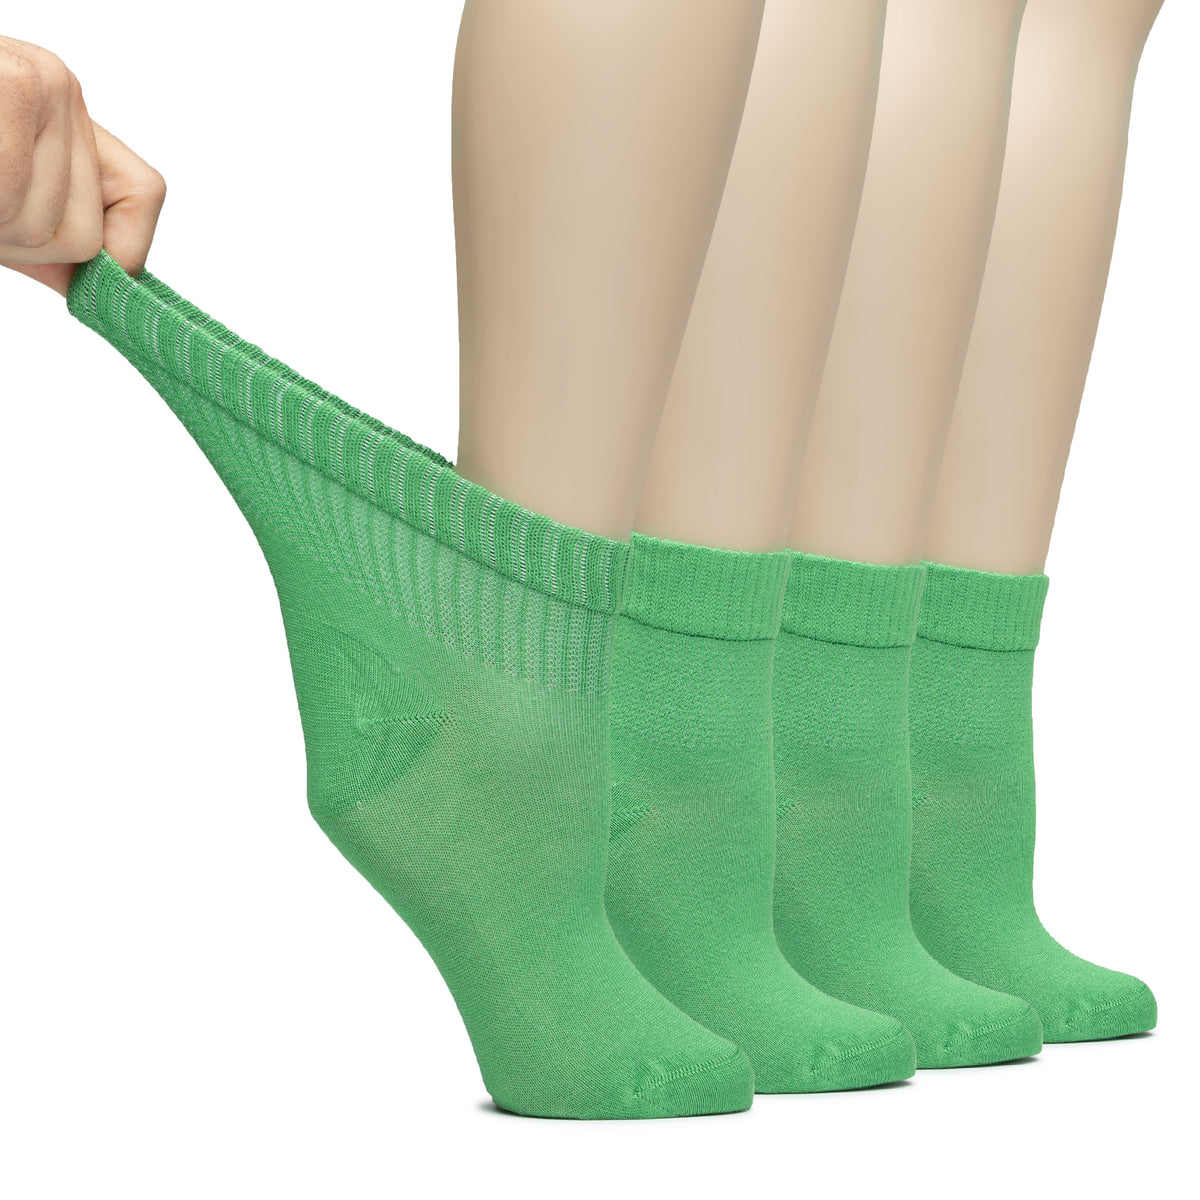 Hugh Ugoli Lightweight Women's Diabetic Ankle Socks Bamboo Thin Socks Seamless Toe and Non-Binding Top, 4 Pairs, , Shoe Size: 6-9/10-12 | Shoe Size: 10-12 | Green